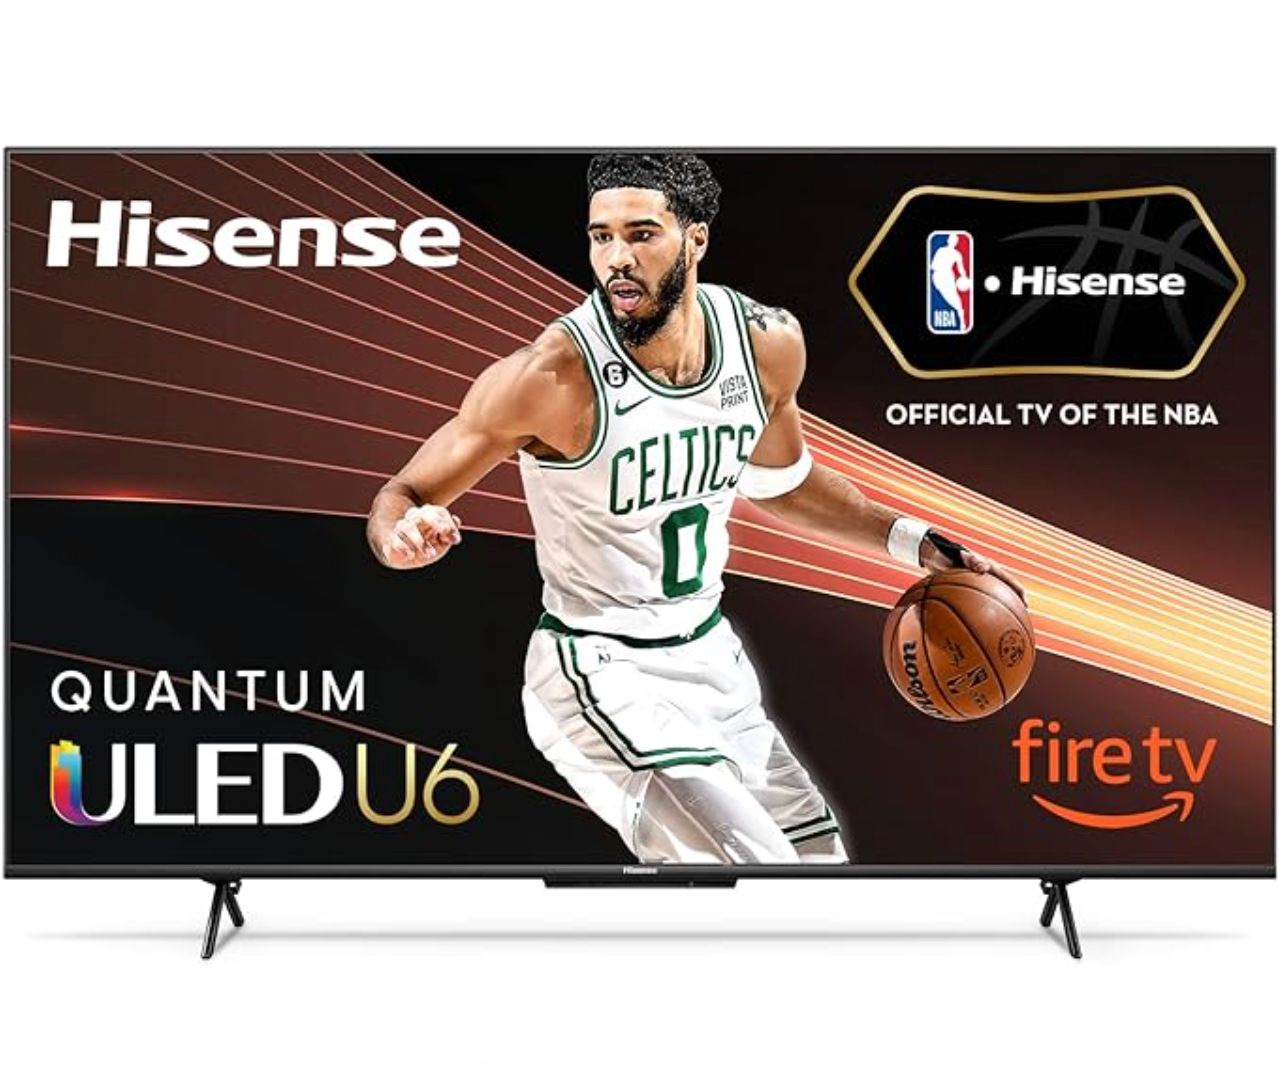 Hisense 58-inch ULED Fire TV